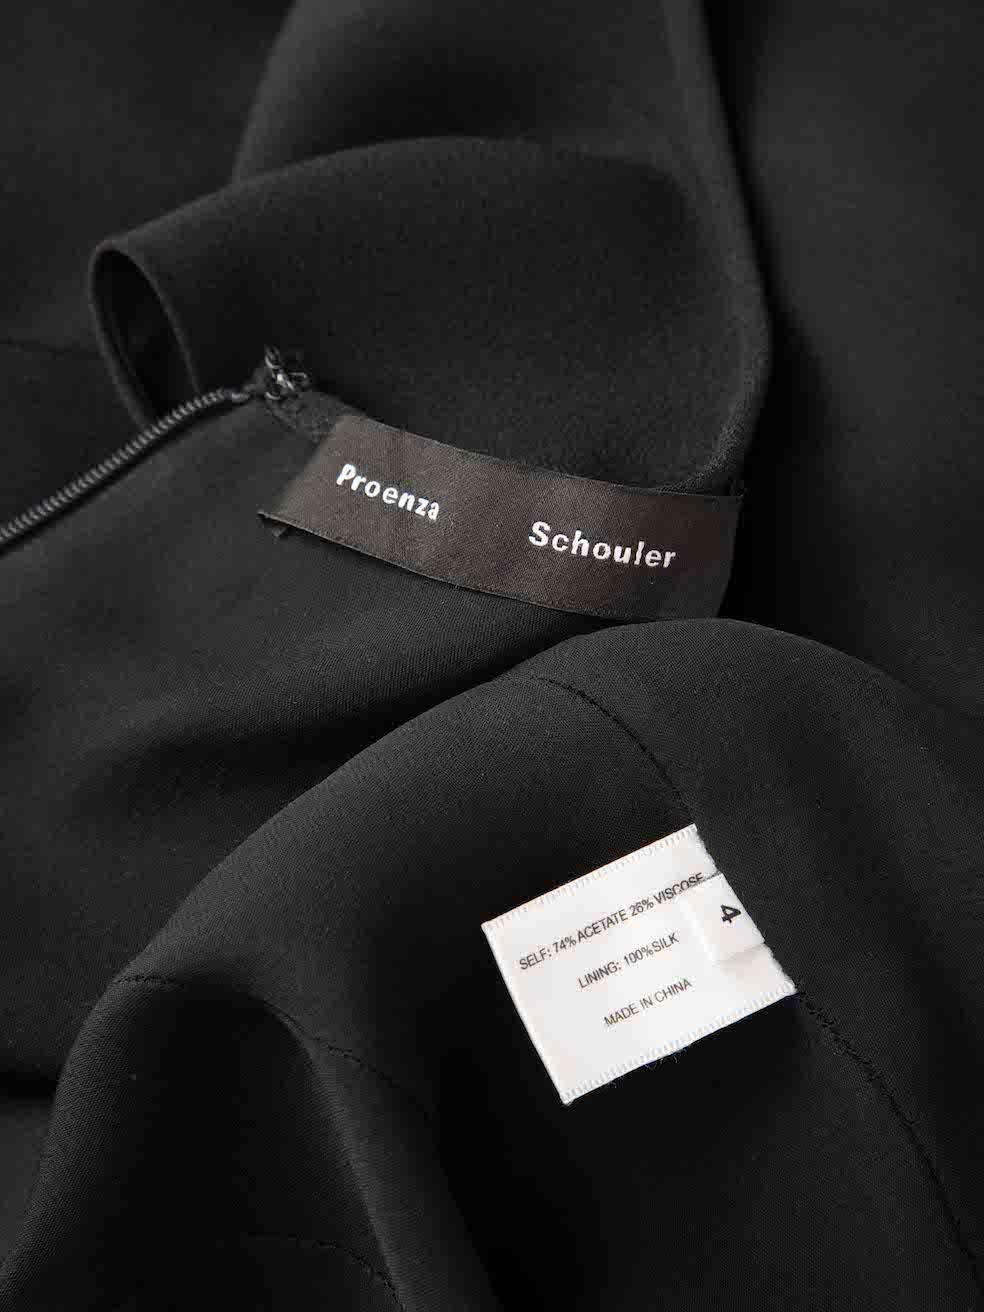 Proenza Schouler Black Flared Knee Length Dress Size S For Sale 2